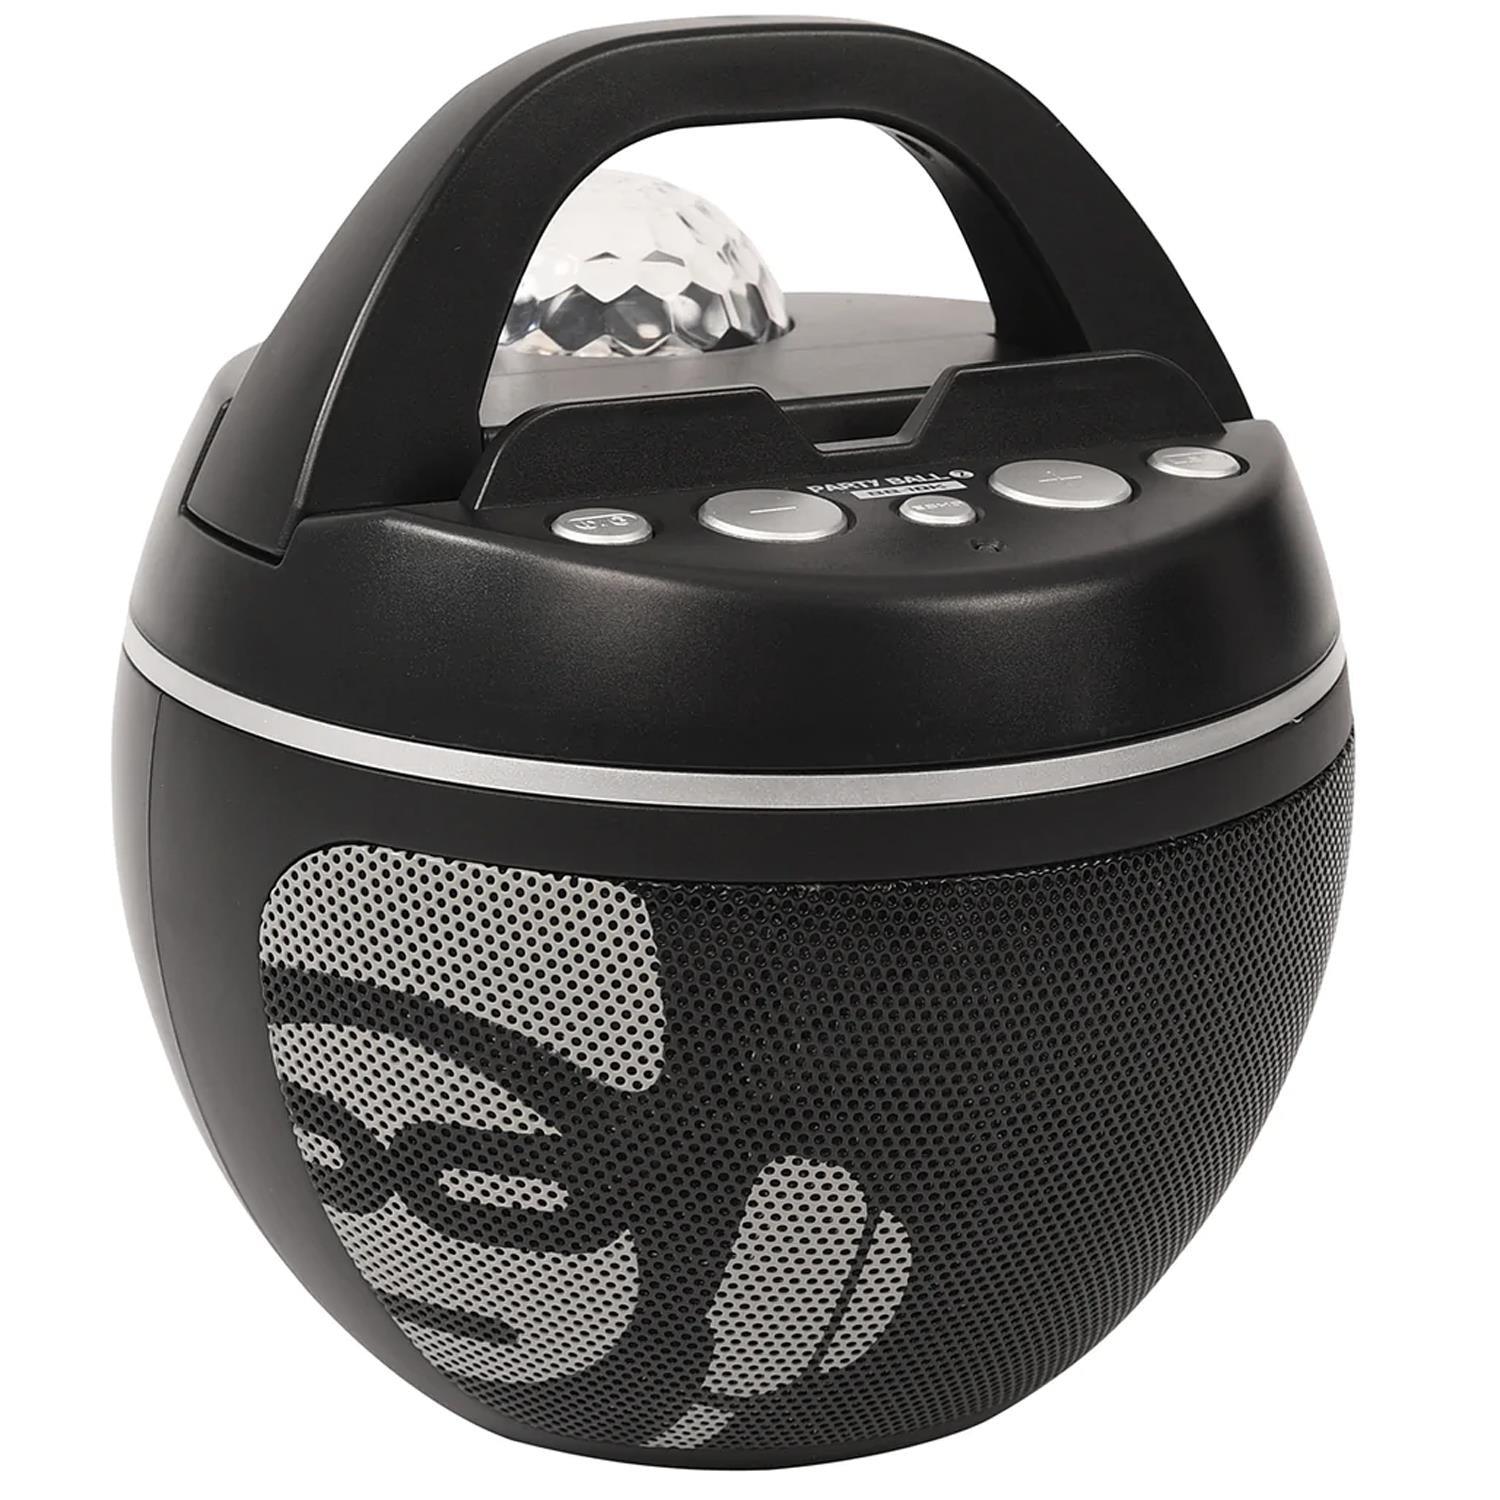 iDance Party Ball 2 Bluetooth Karaoke System - DY Pro Audio